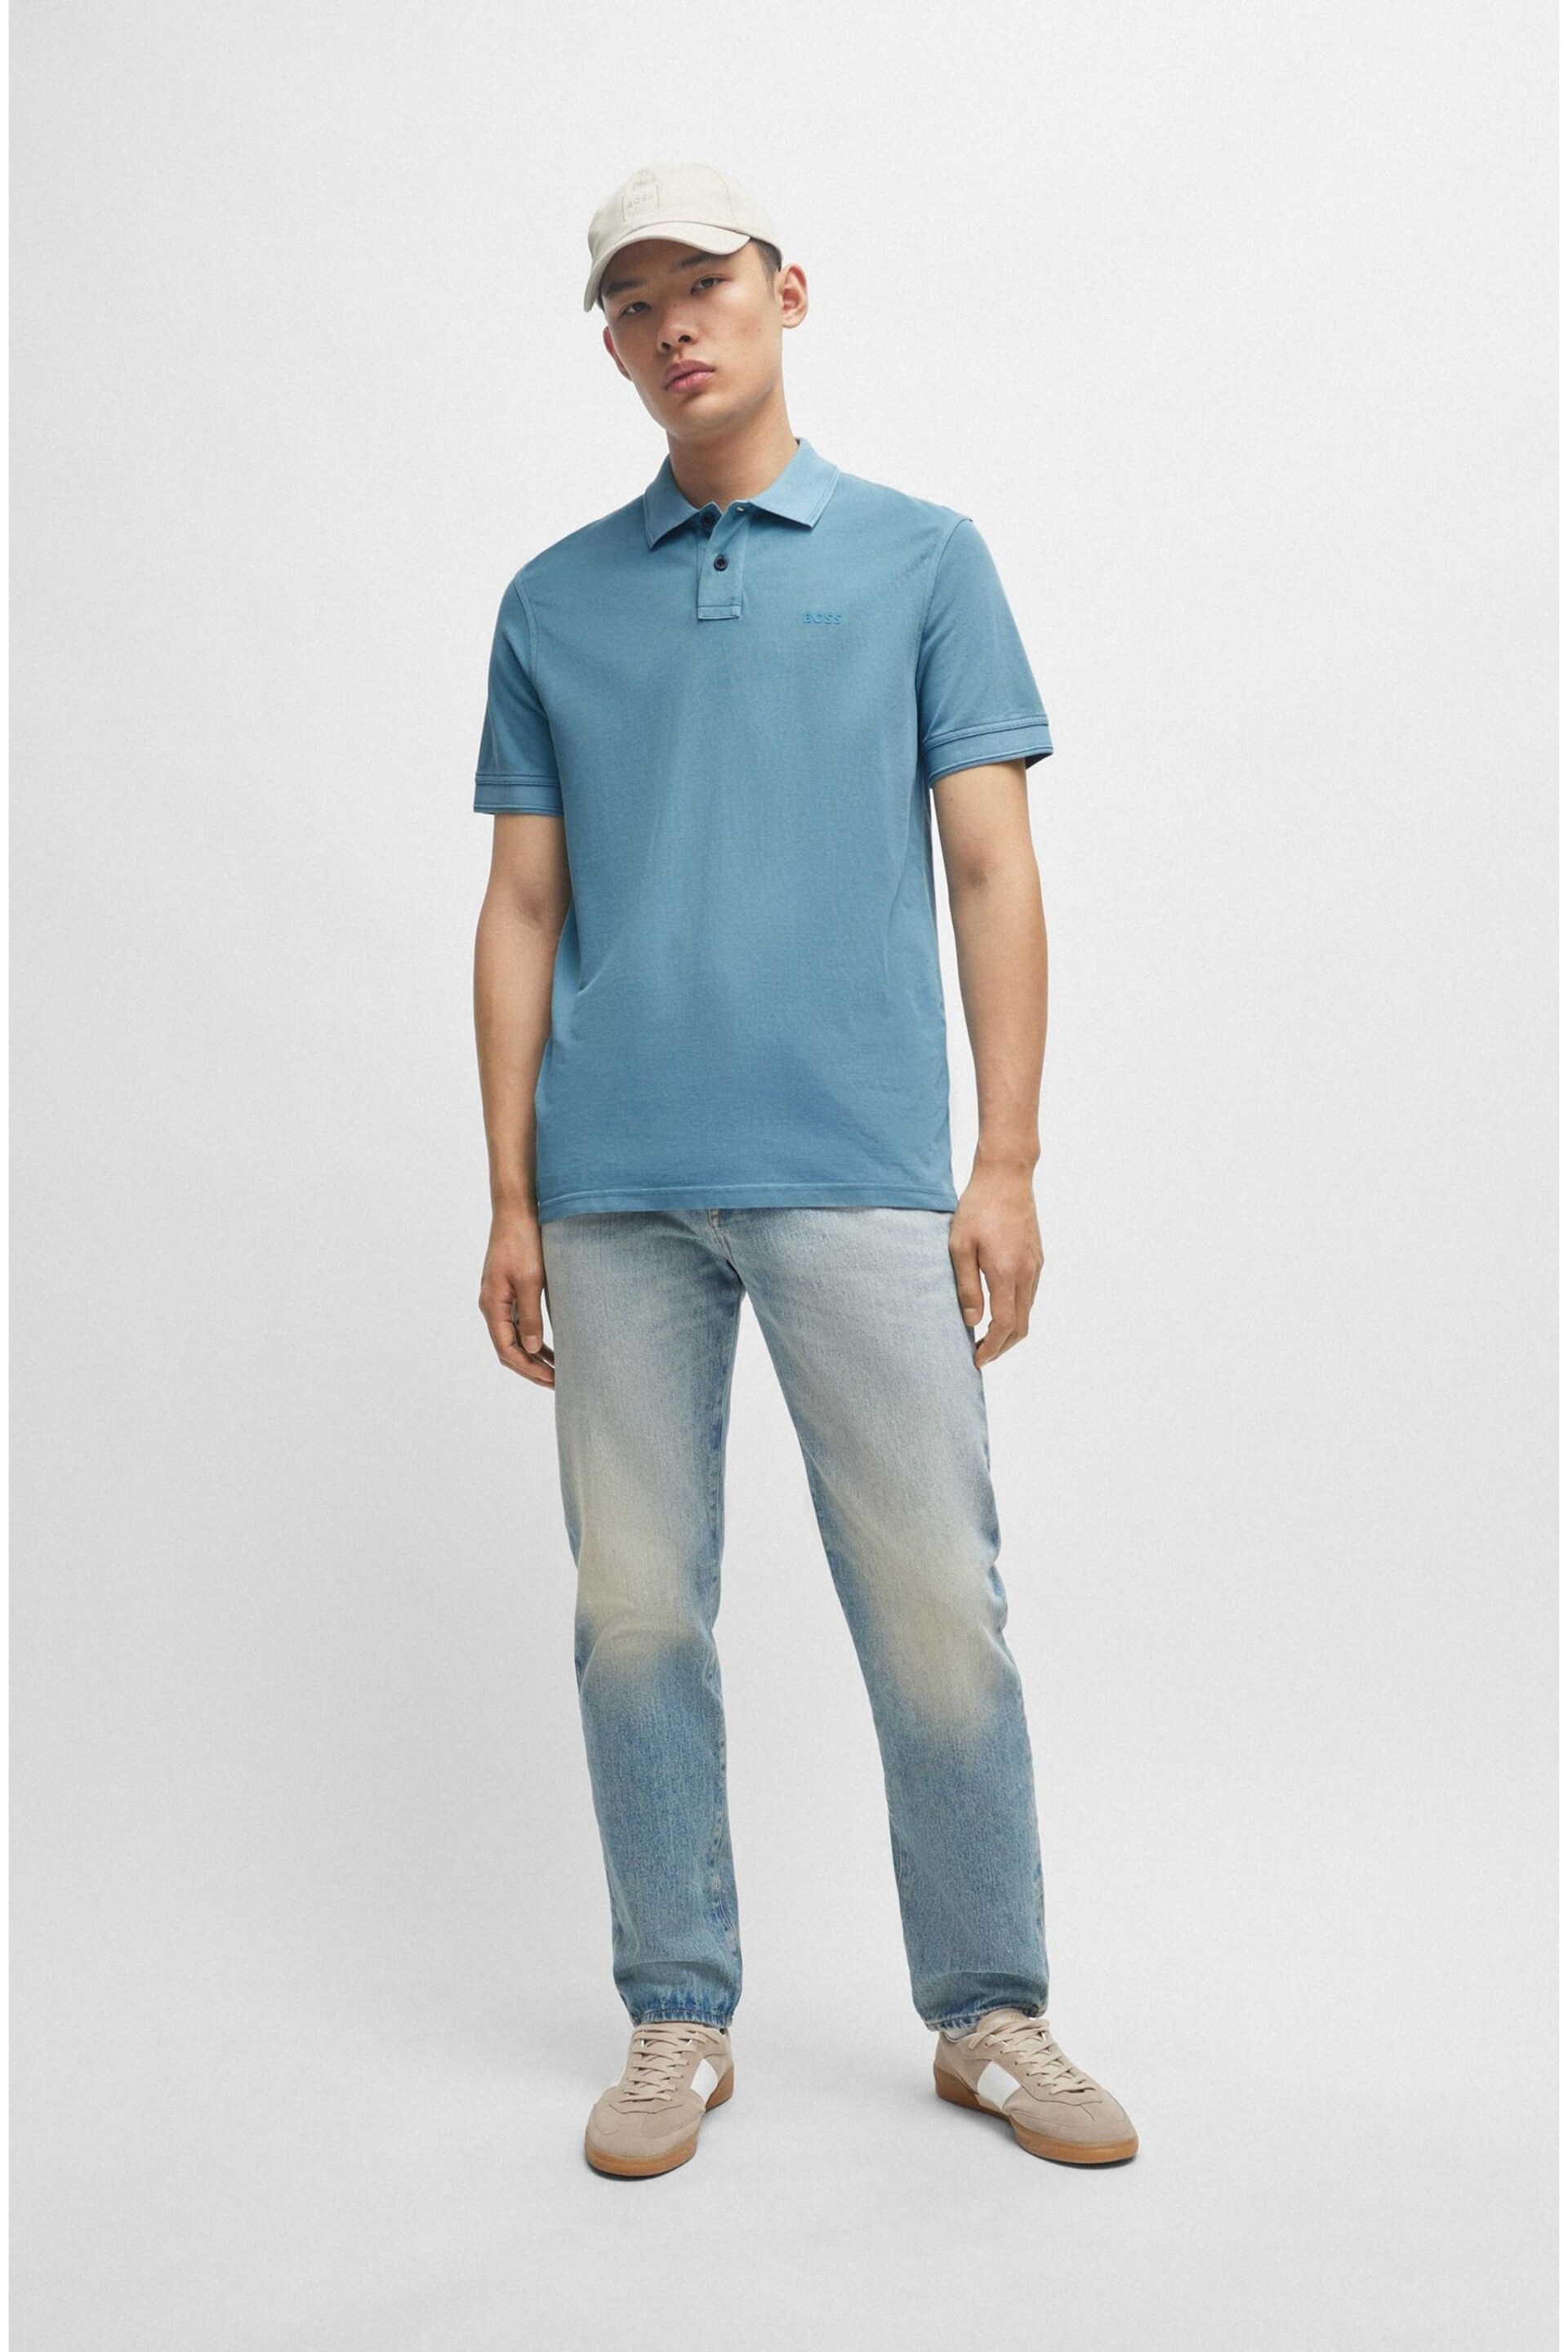 BOSS Sky Blue Cotton Pique Polo Shirt - Image 3 of 5